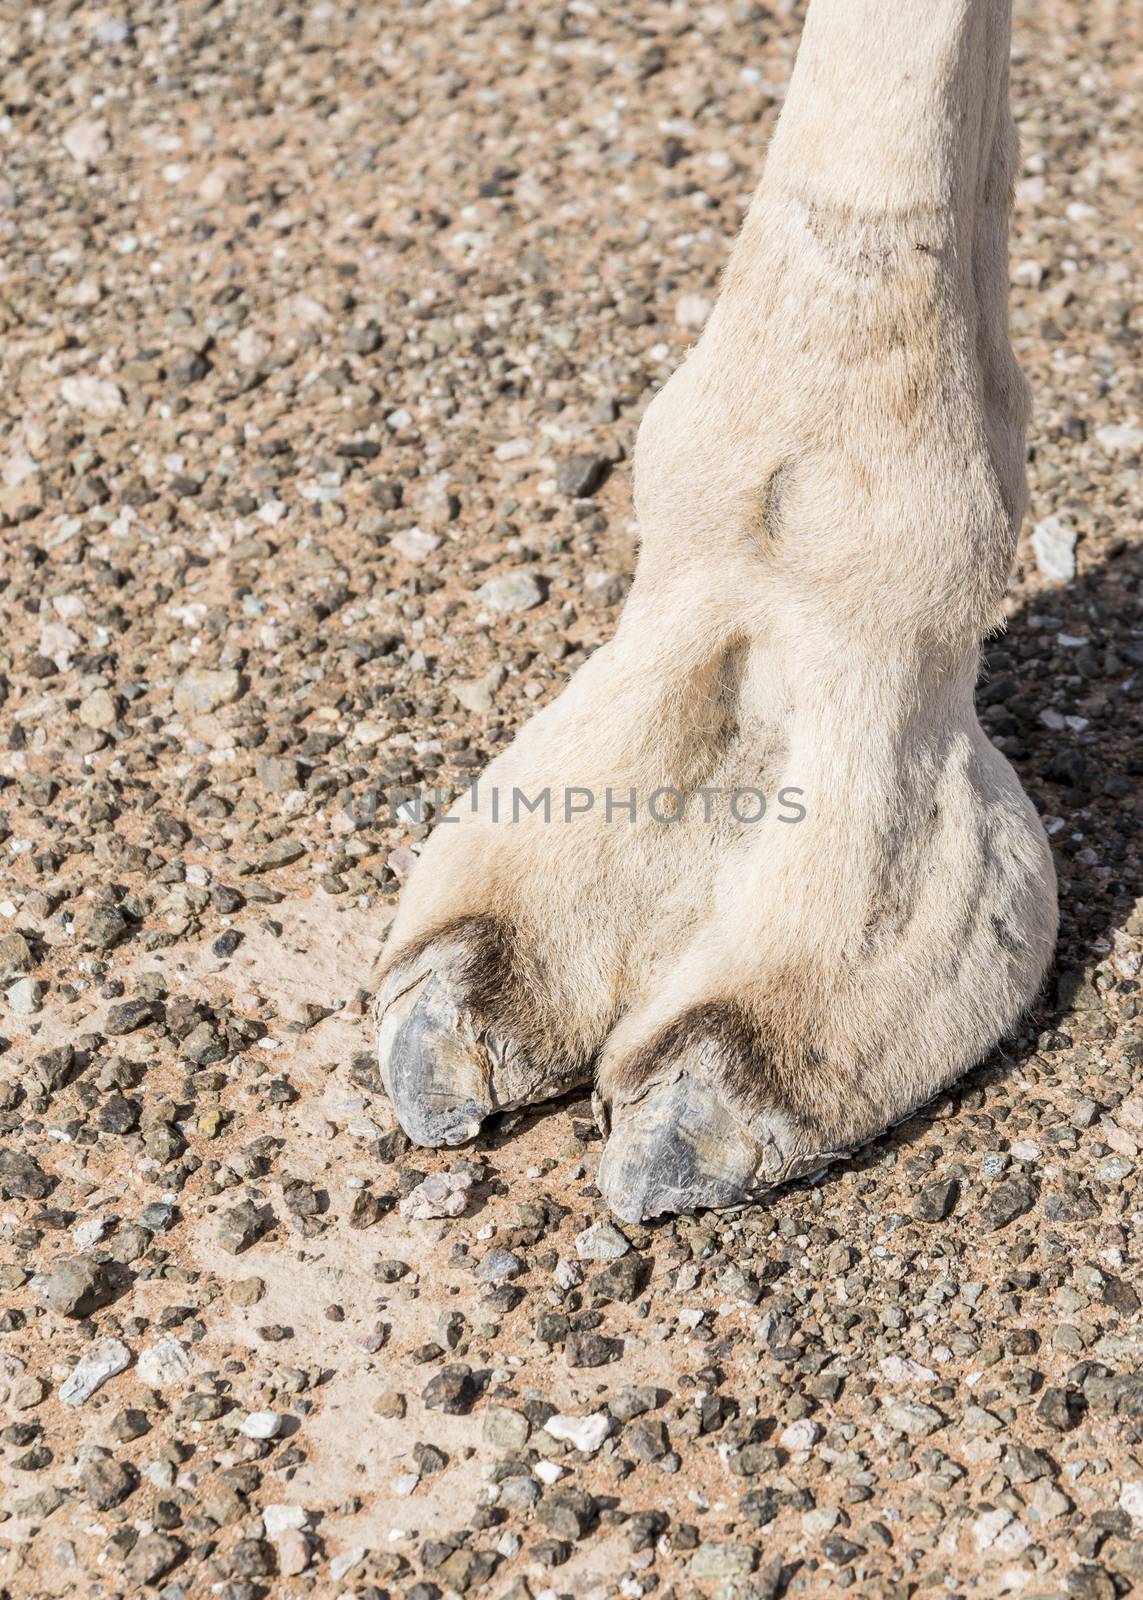 Closeup of Camel foot in the desert of Sharjah Emirates, United Arab Emirates